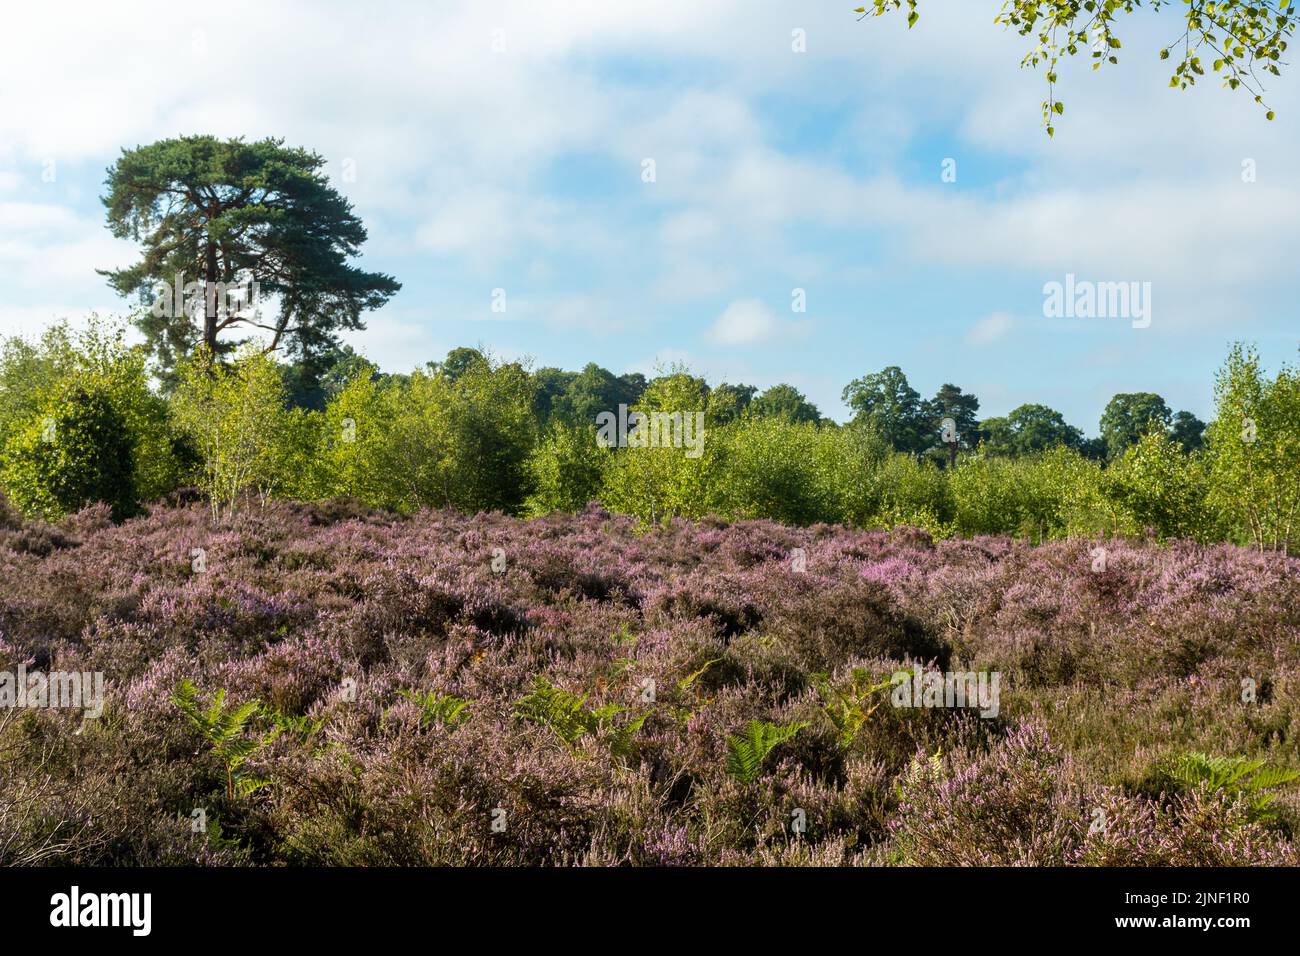 View of Chatley Heath, beautiful lowland heathland with flowering purple heather in August, Surrey, England, UK Stock Photo